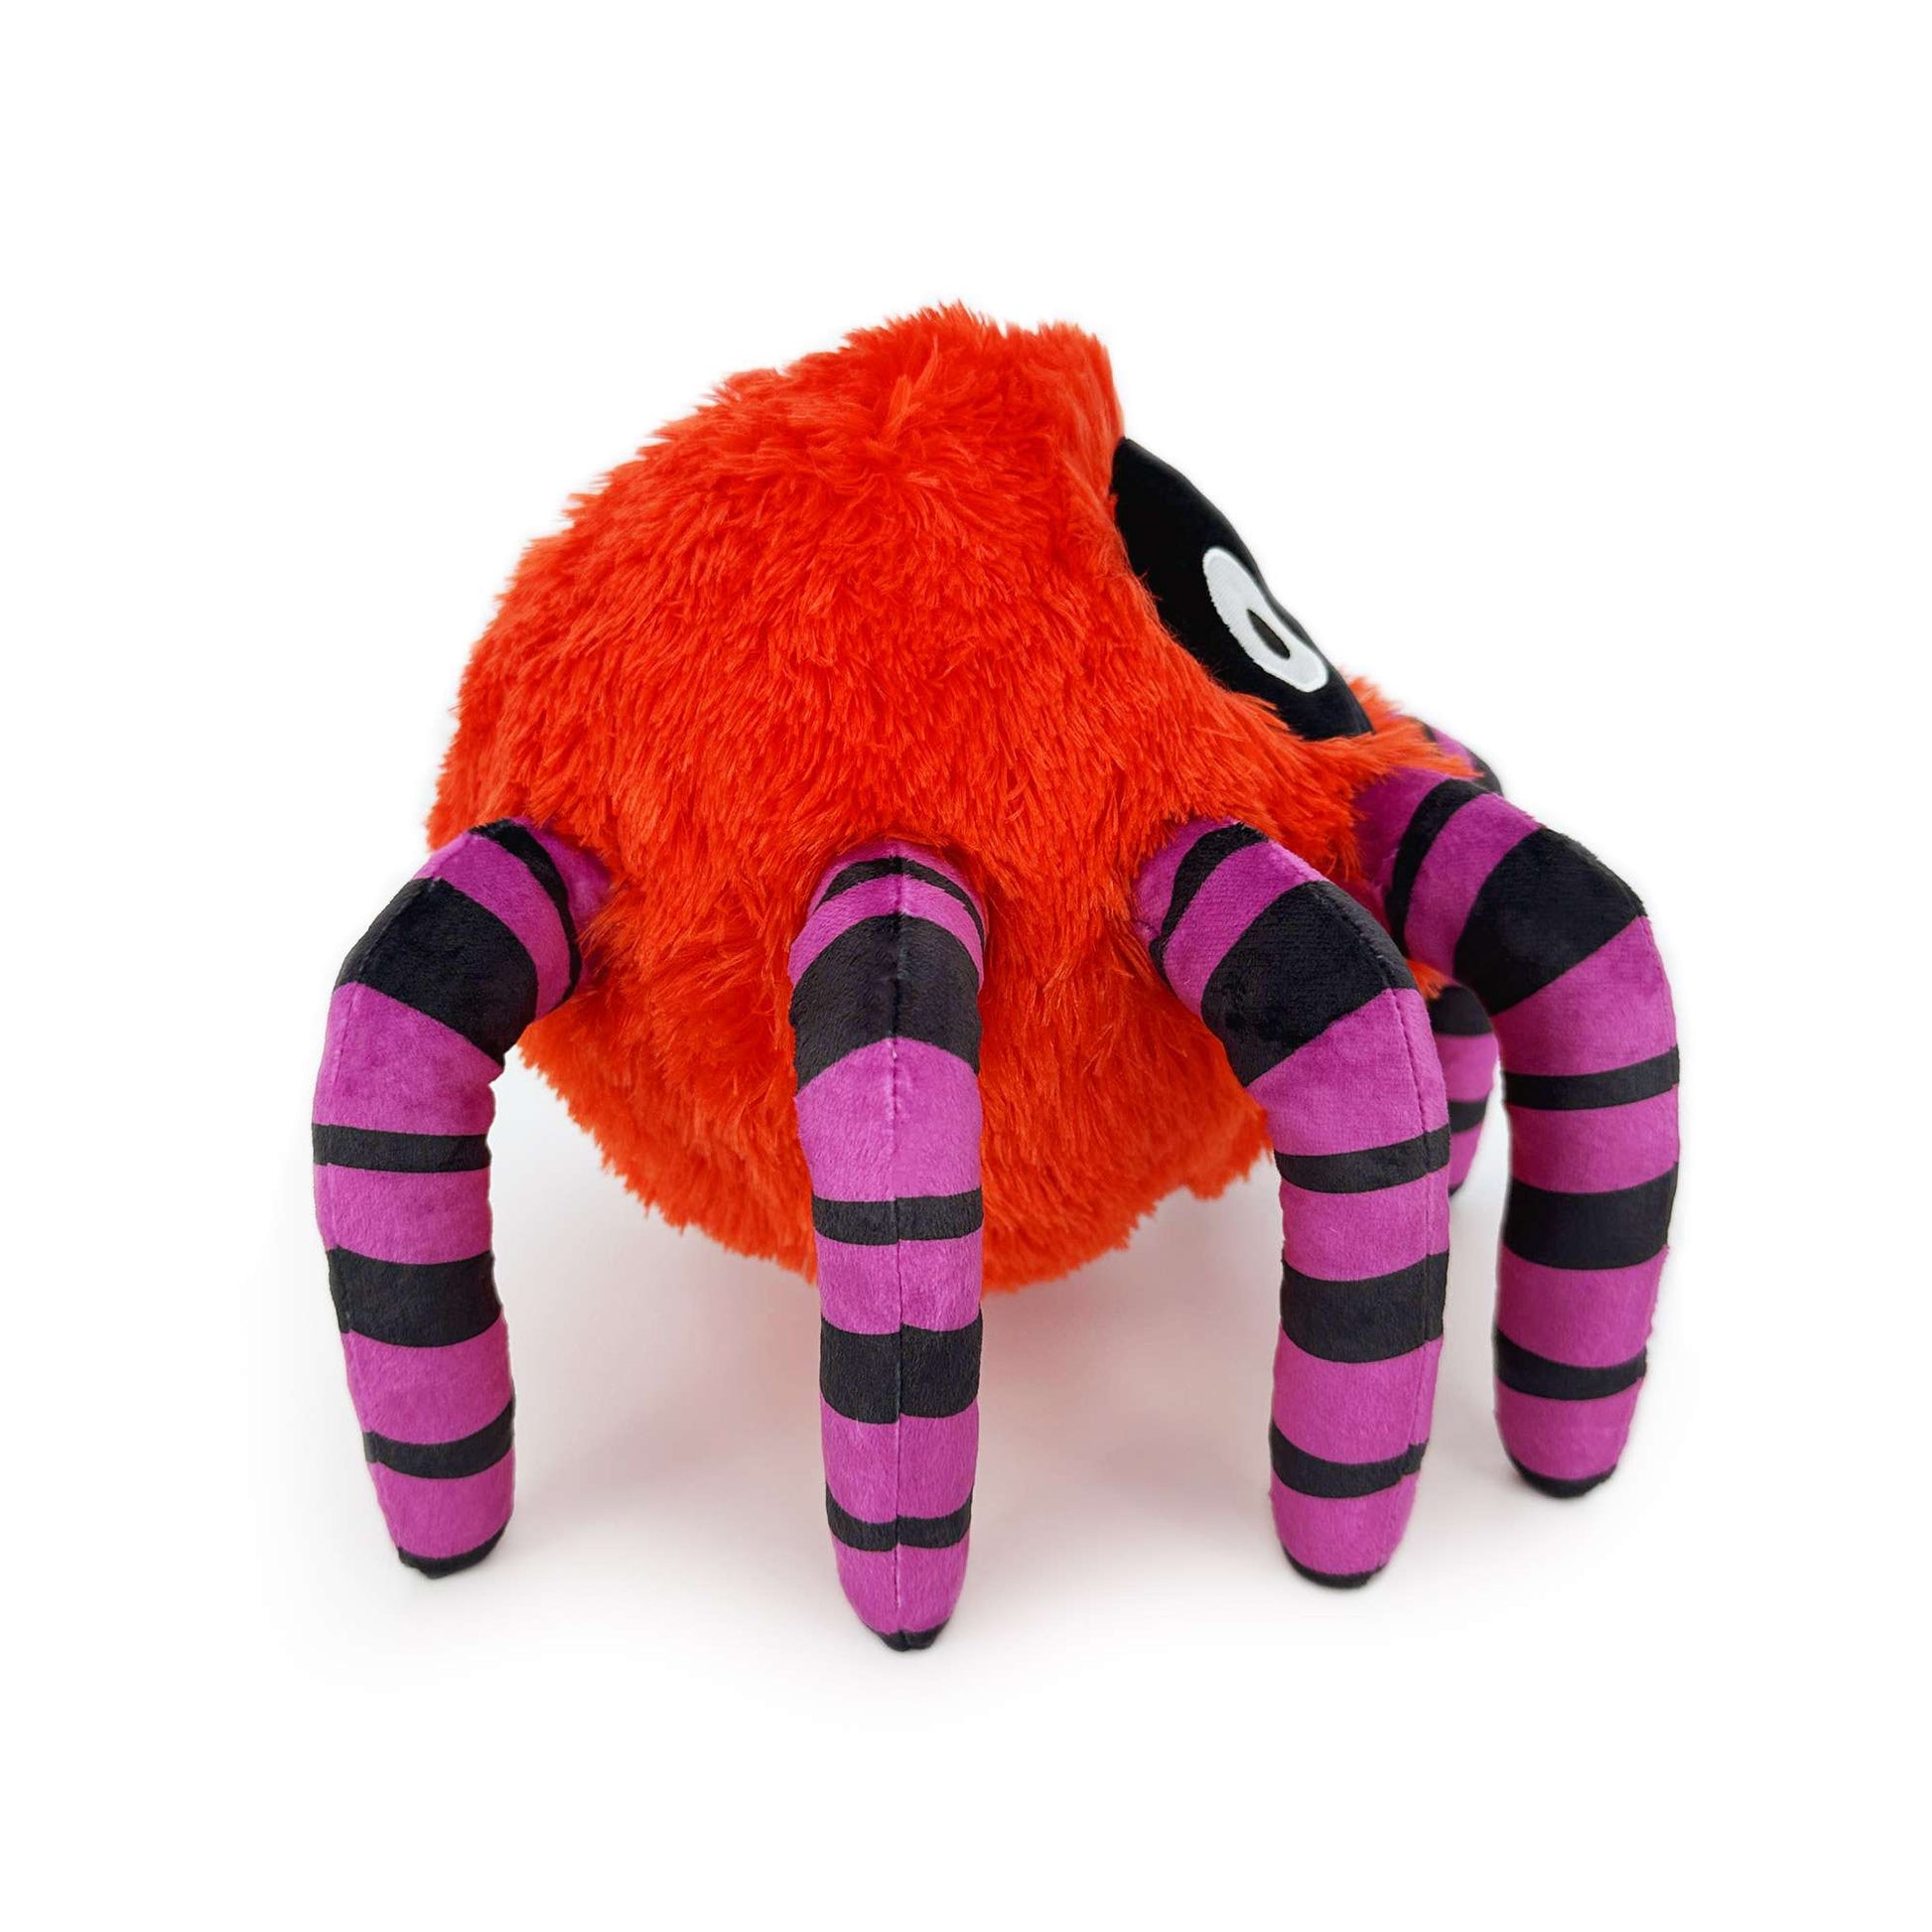 alloween gift spider stuffed animal